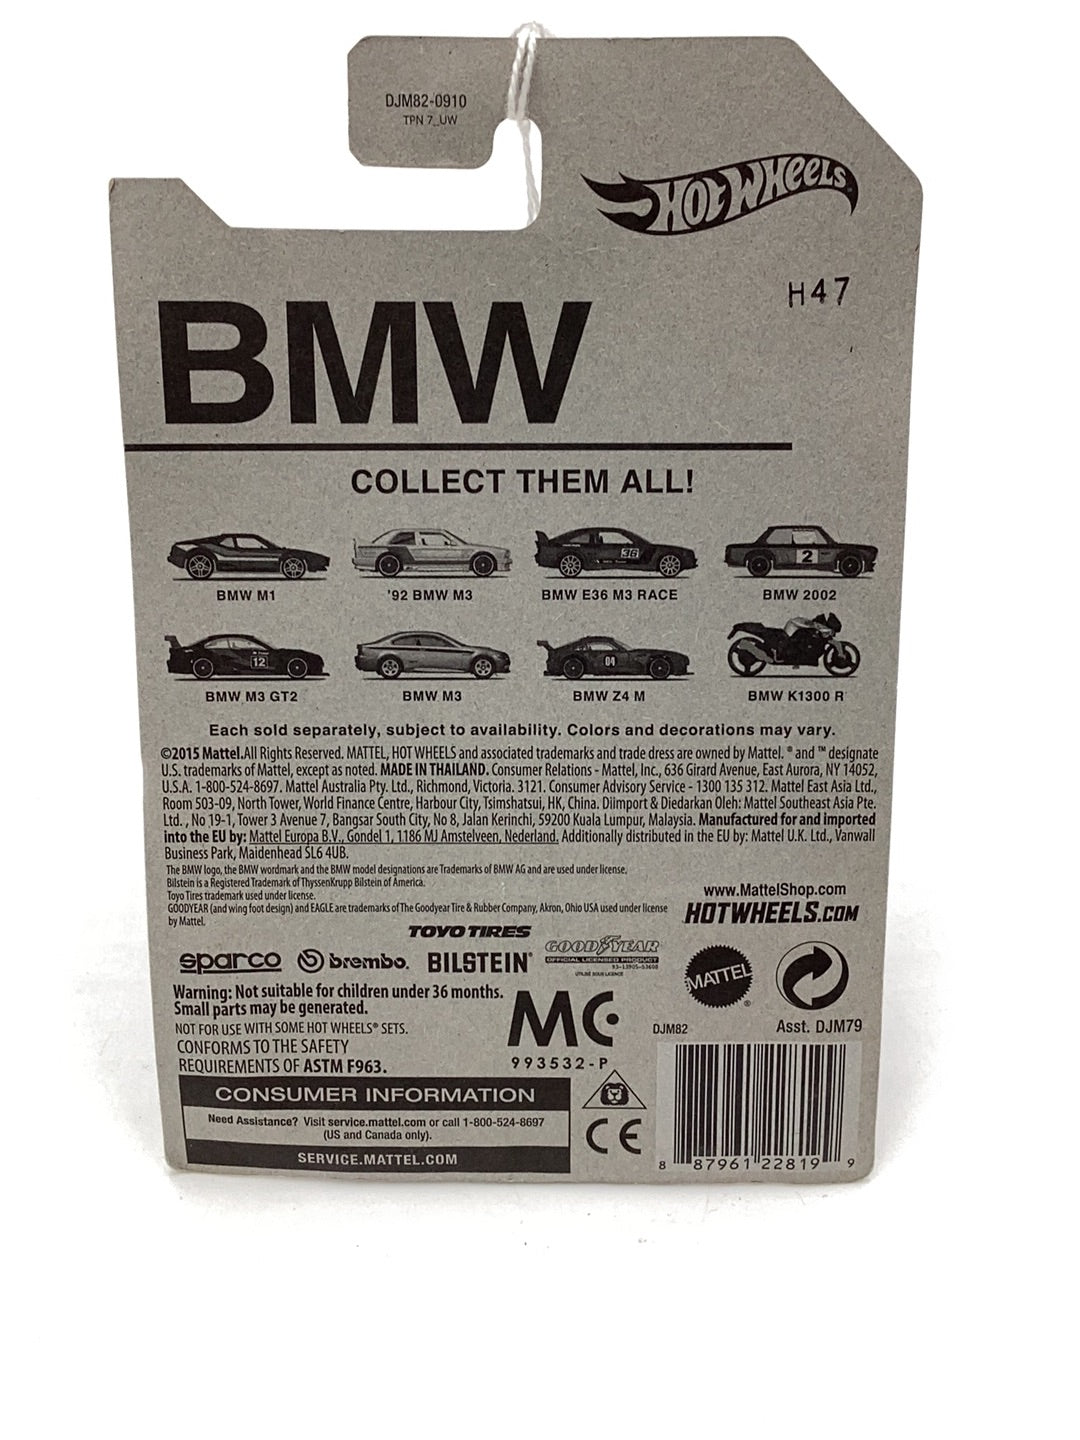 Hot wheels BMW series BMW E36 M3 race Walmart exclusive 151D